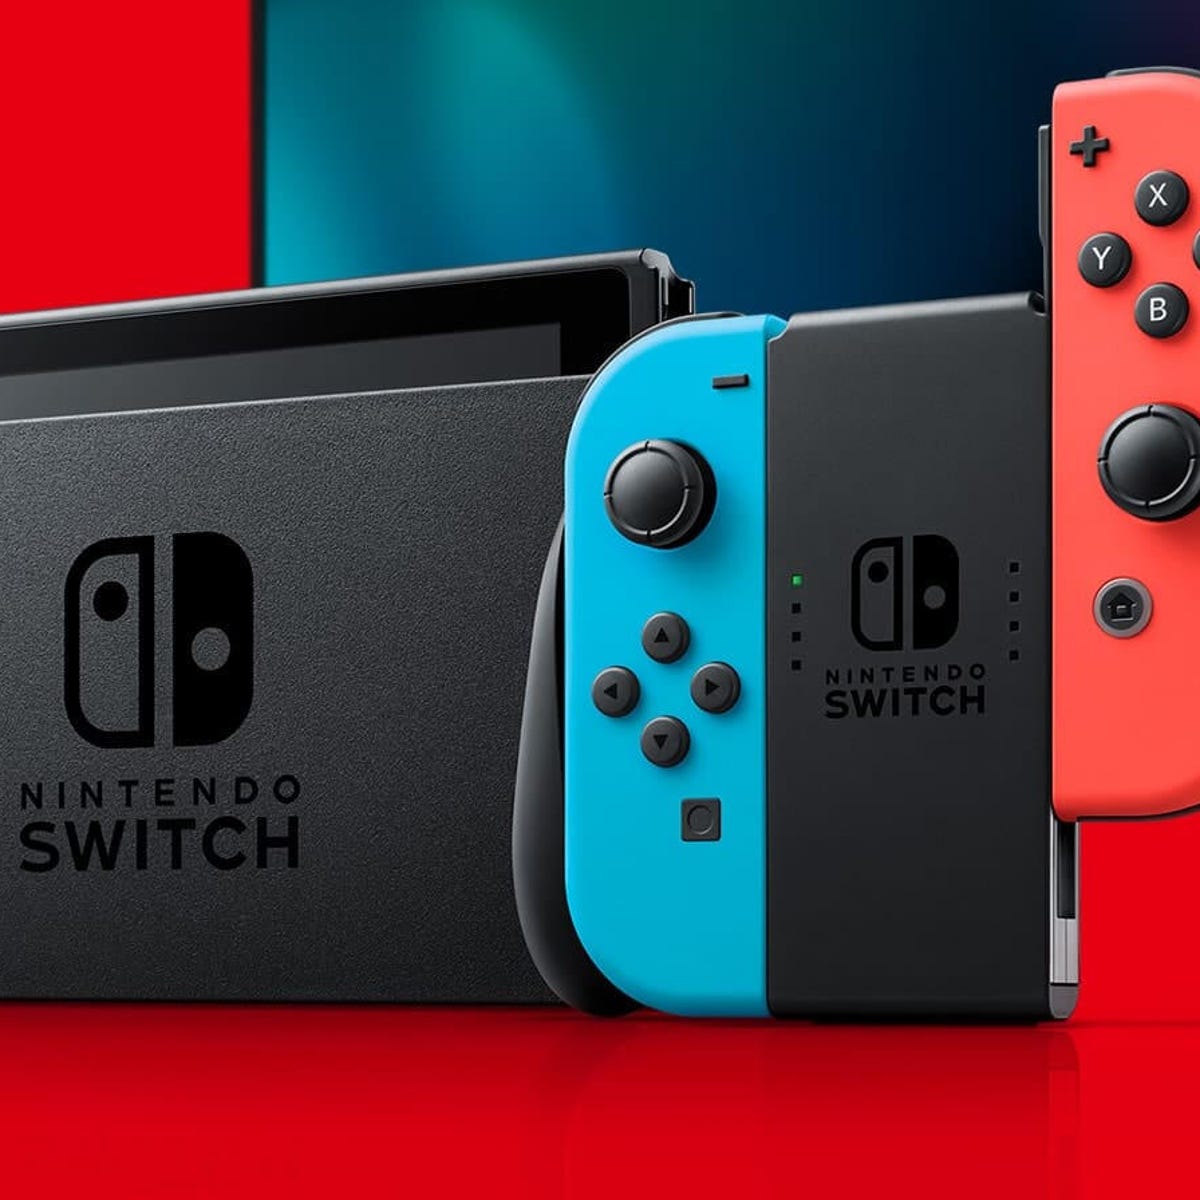 Нинтендо свитч последняя модель. Nintendo Switch Black. Nintendo Switch 2 Concept. Nintendo Switch 2 ревизия. Выход nintendo switch 2